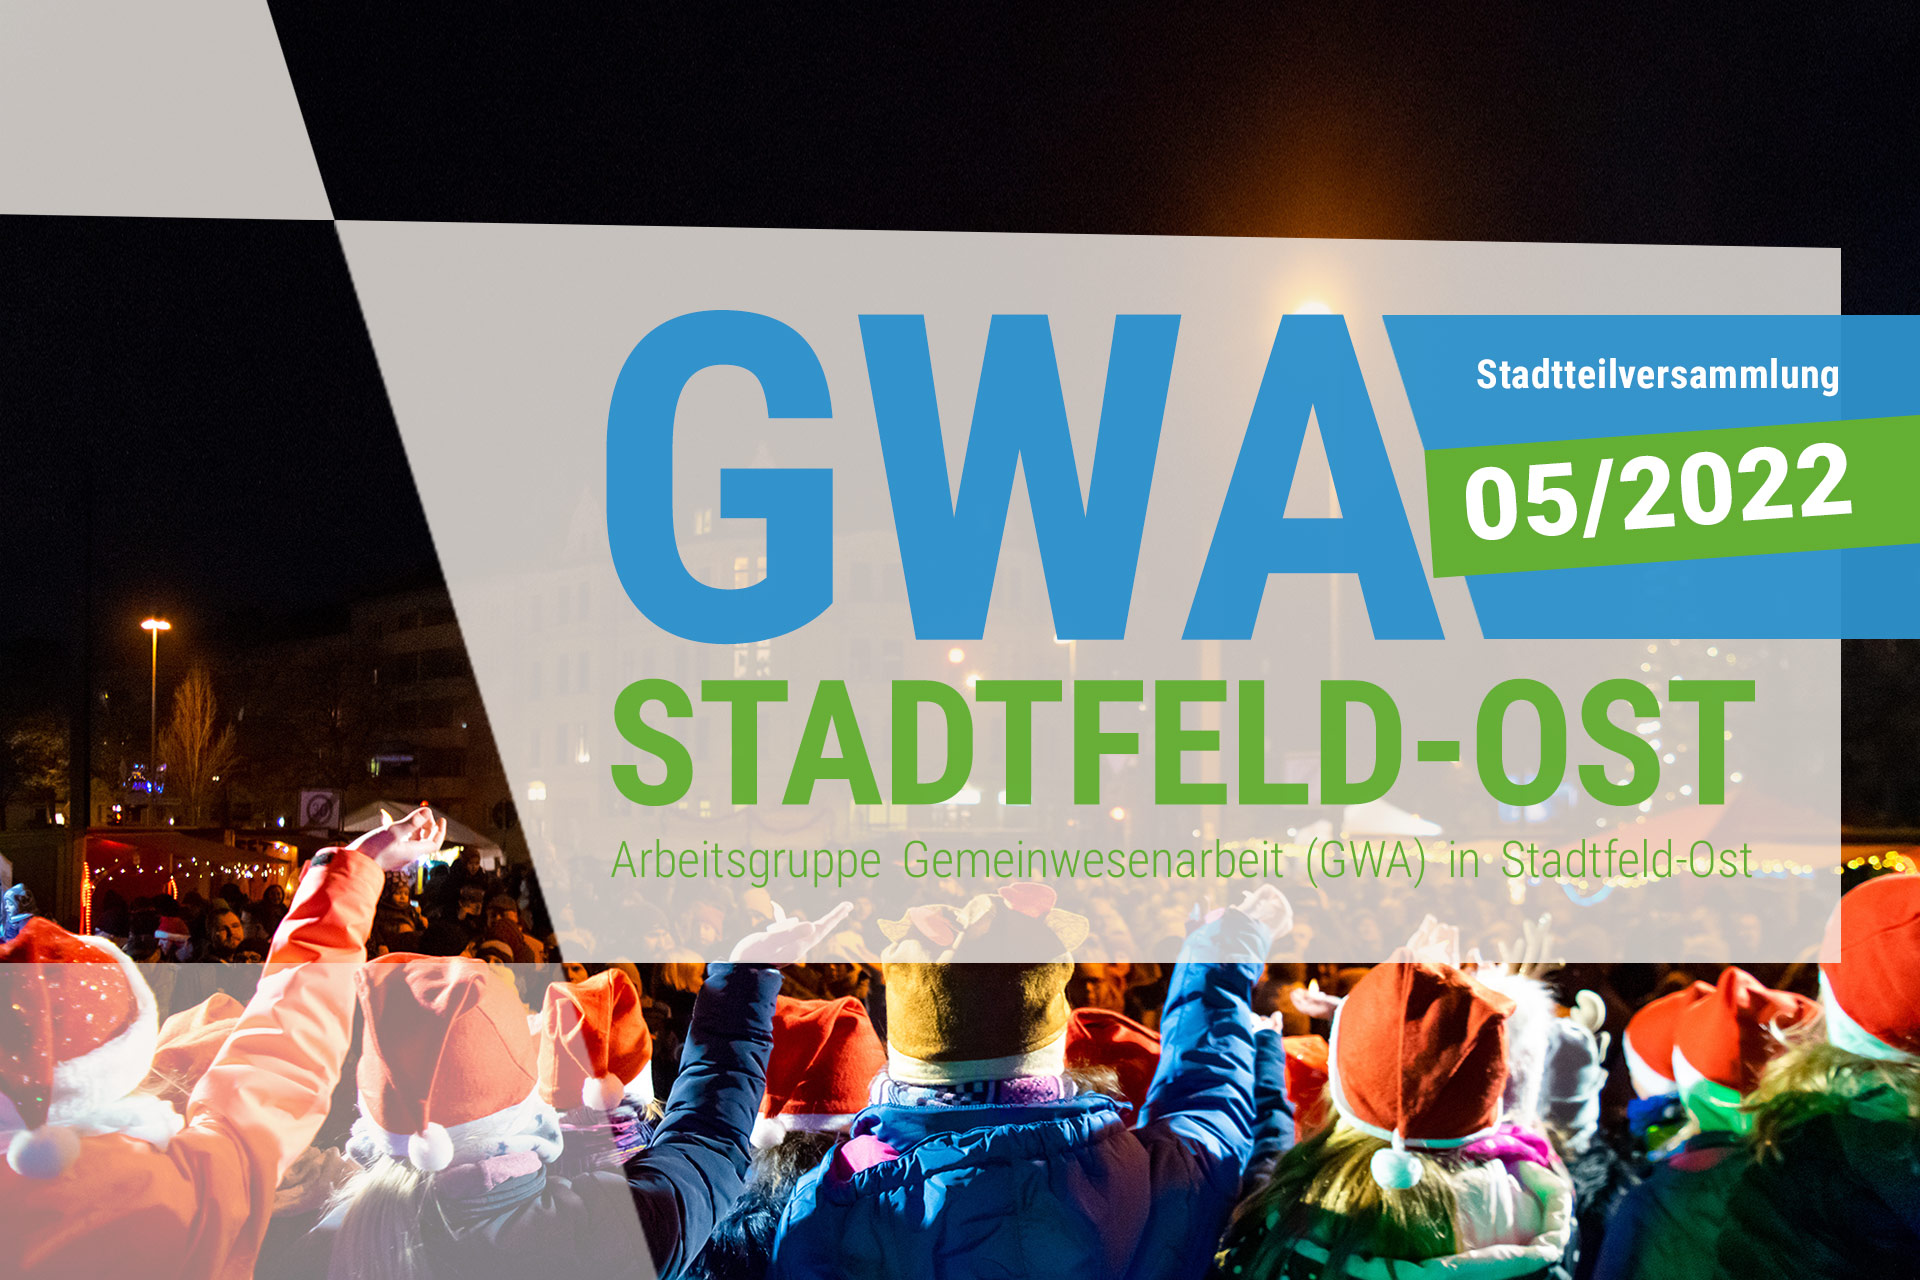 Sitzung der GWA Stadtfeld-Ost am 12.10.2022